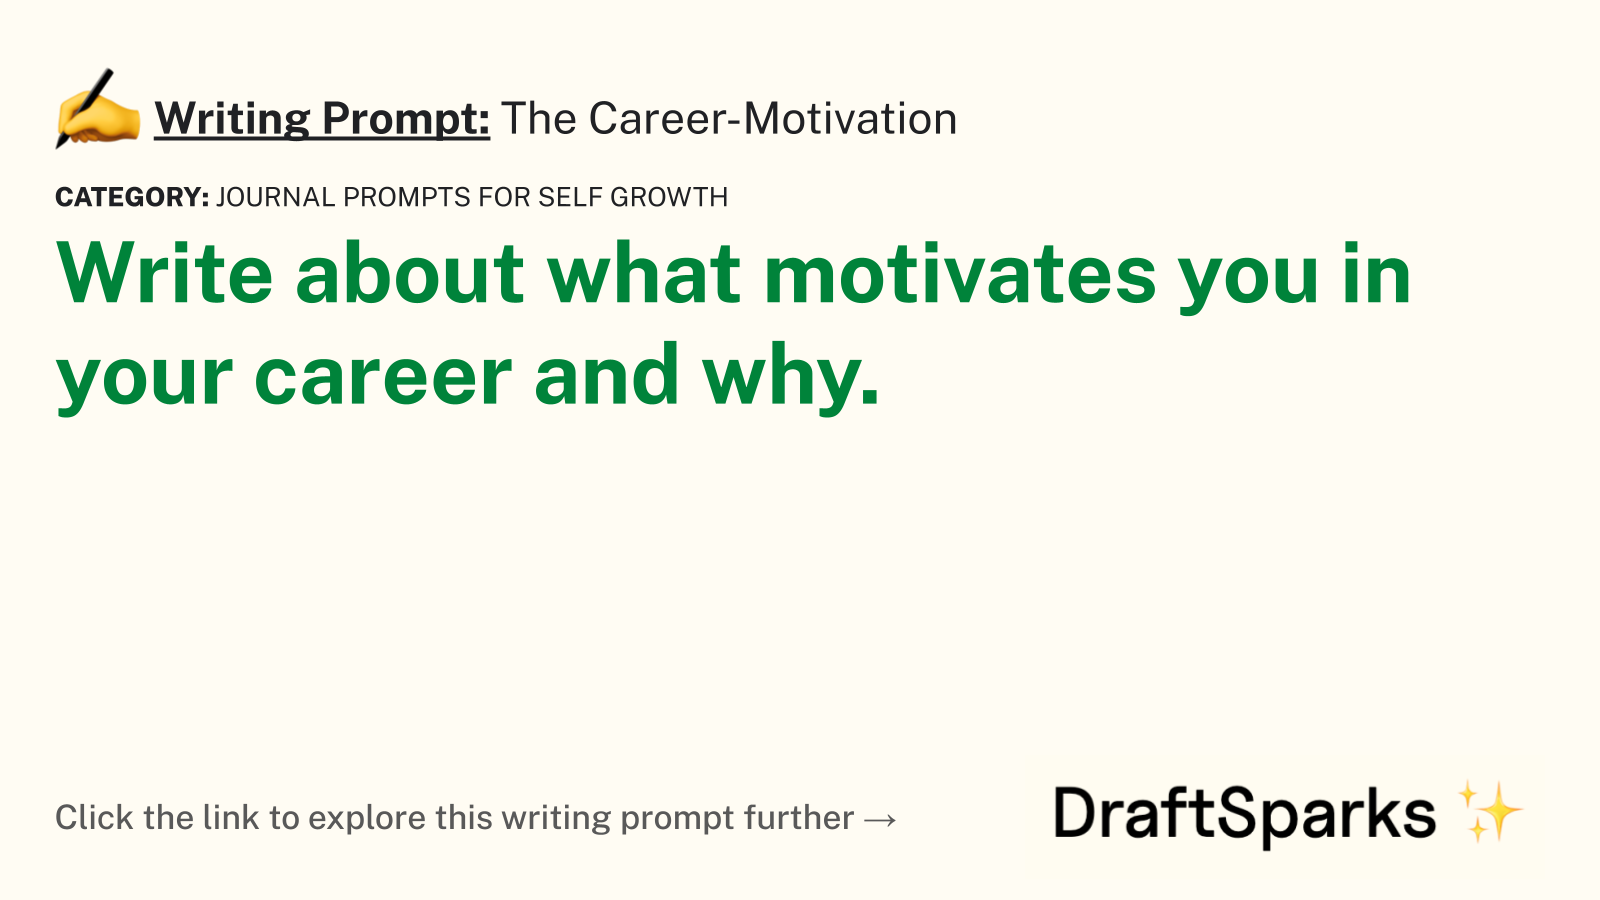 The Career-Motivation